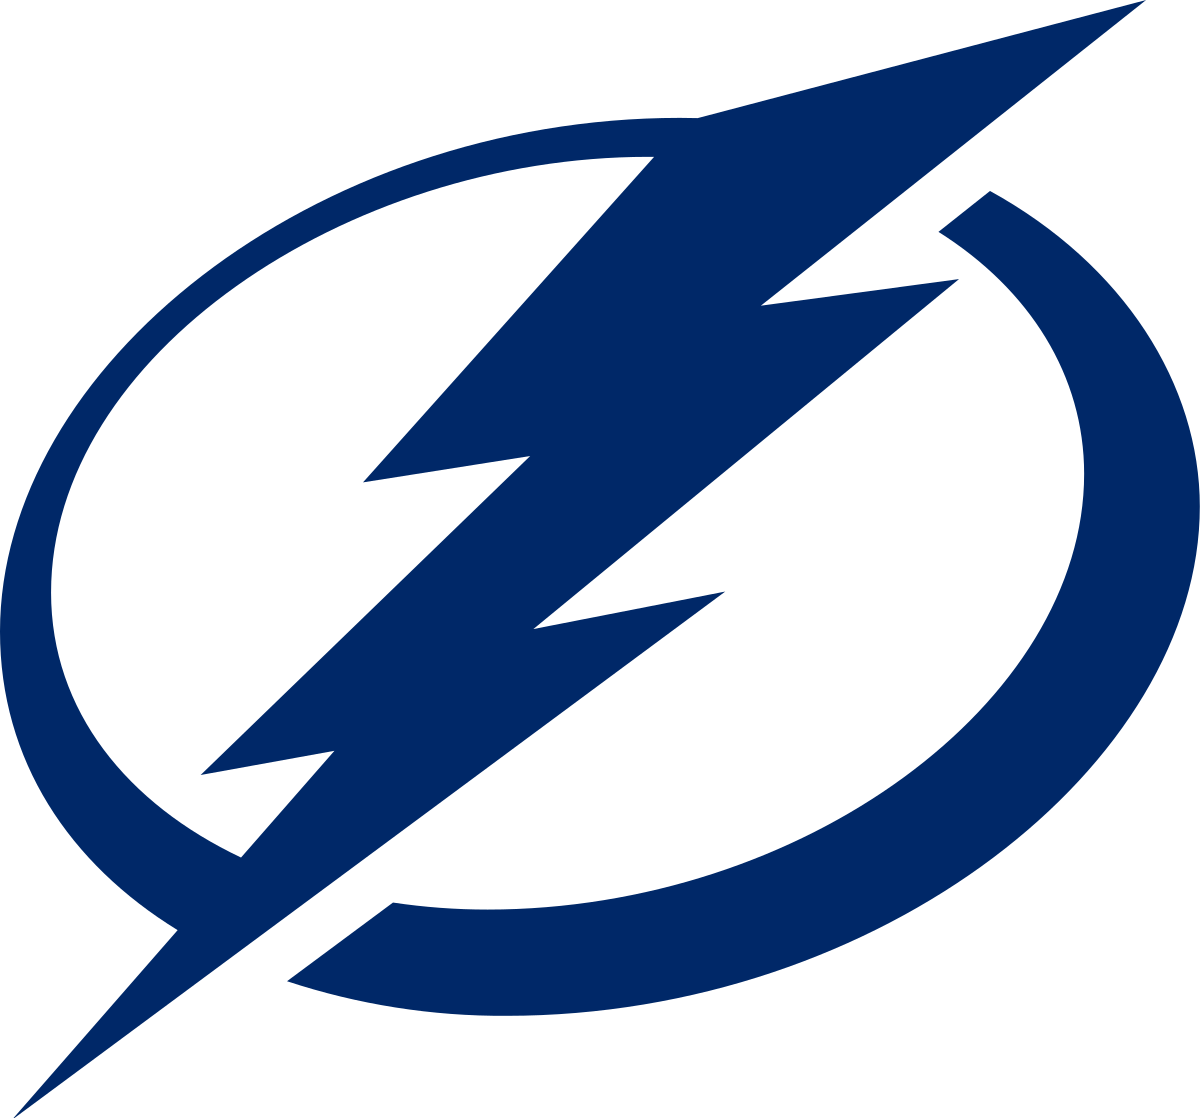 Tampa Bay Lightning - Wikipedia